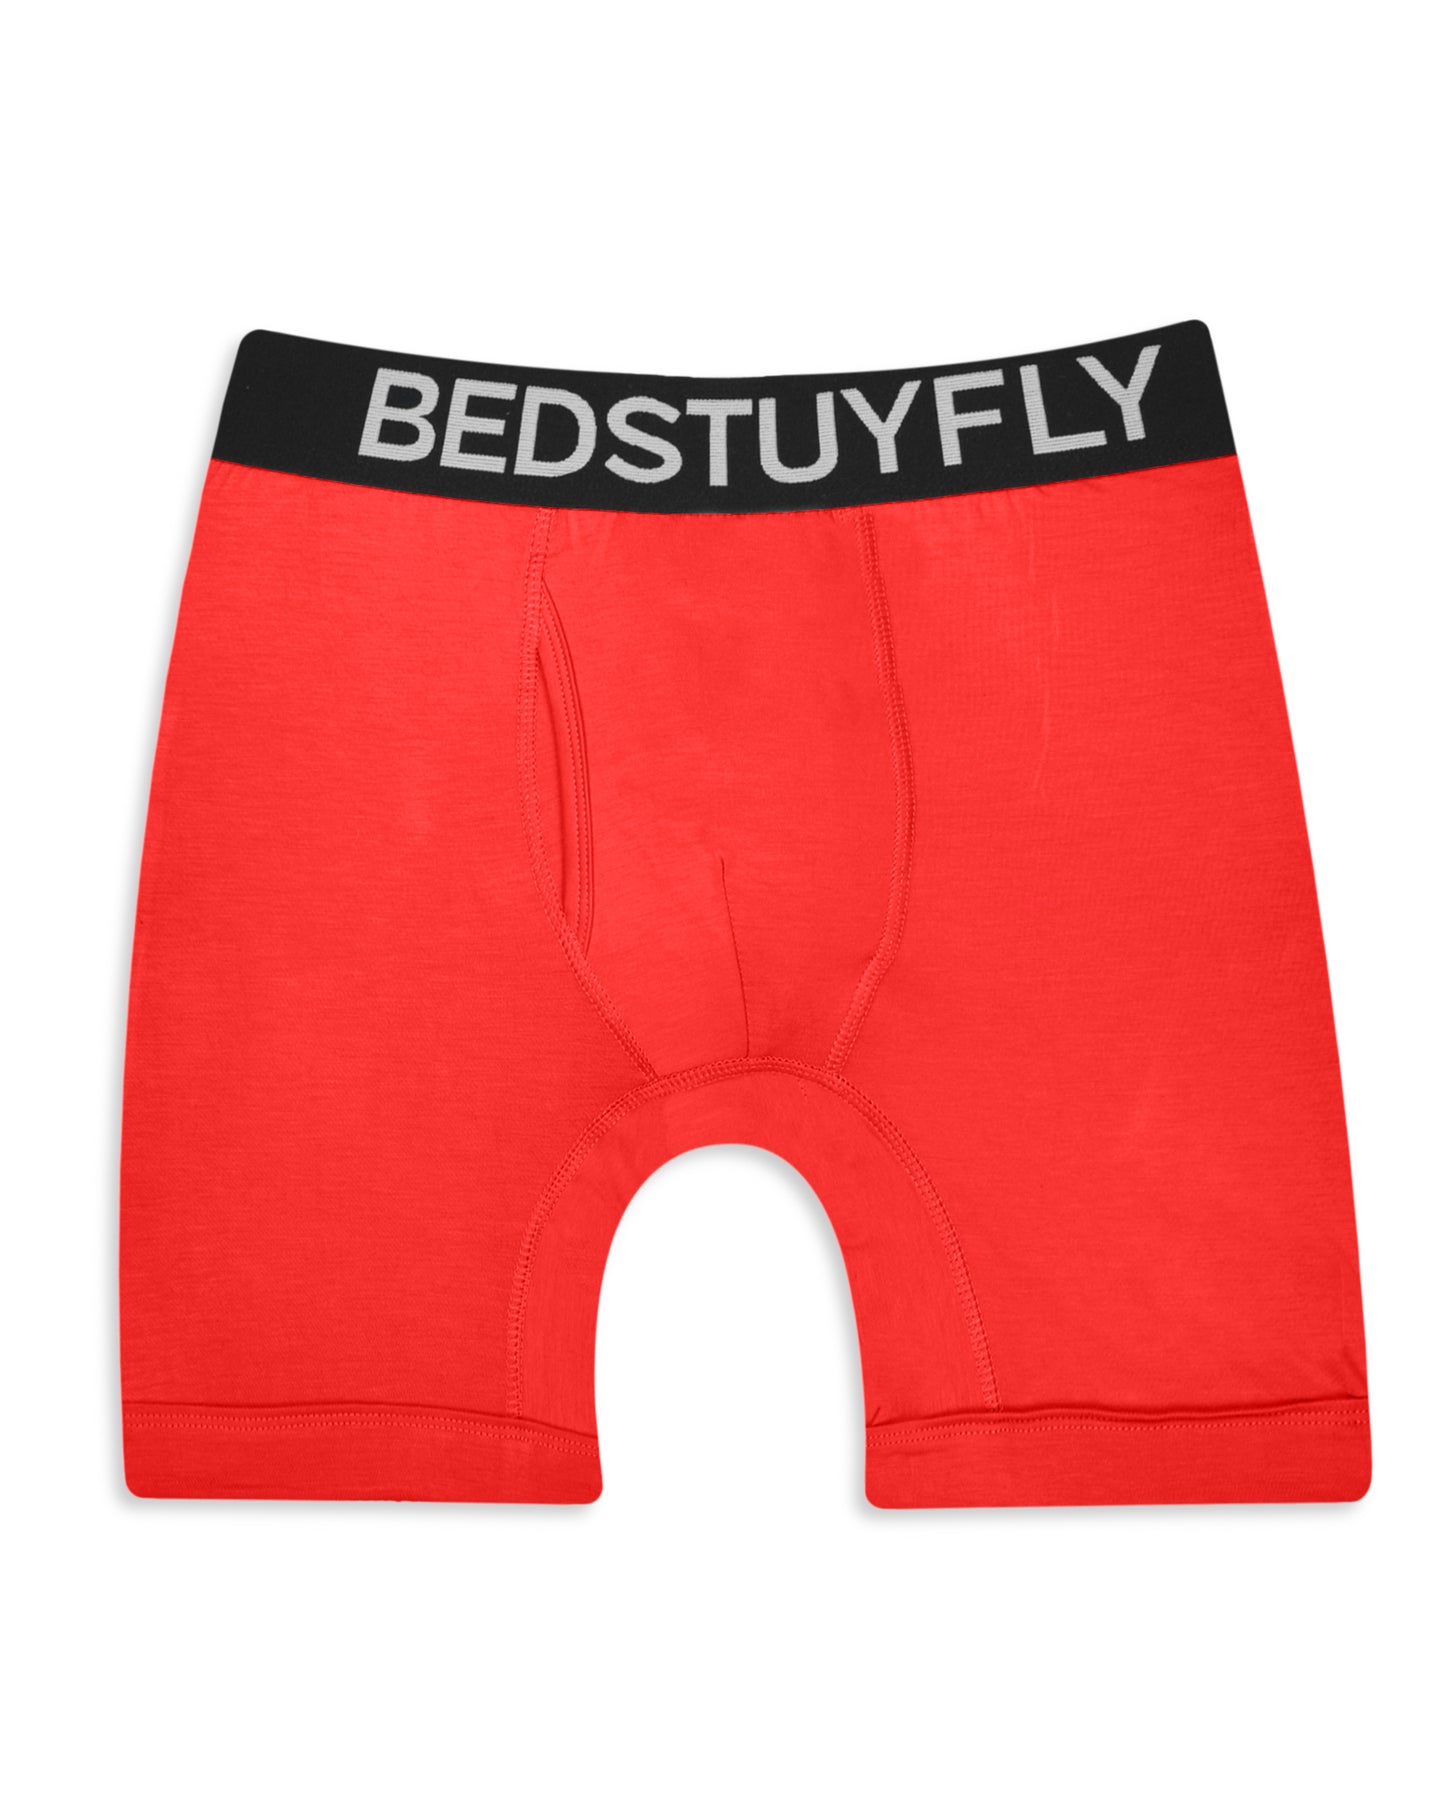 BEDSTUYFLY BOXER BRIEFS (Red) - Bedstuyfly